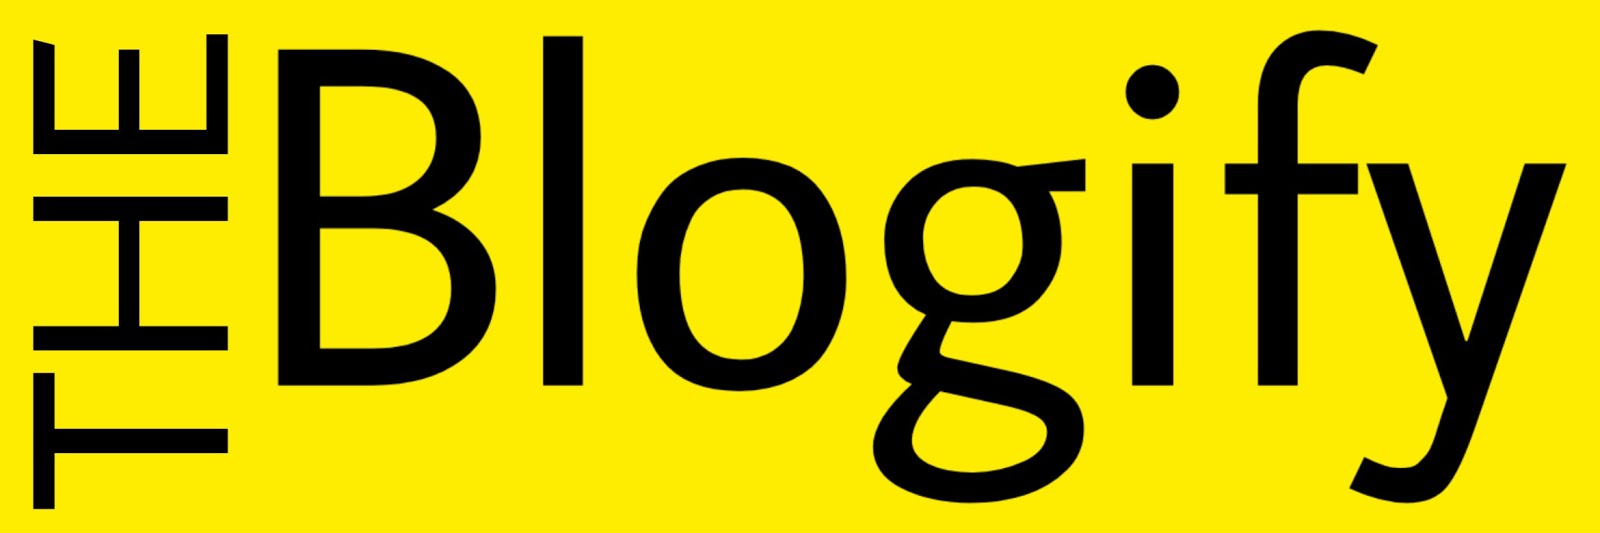 The Blogify